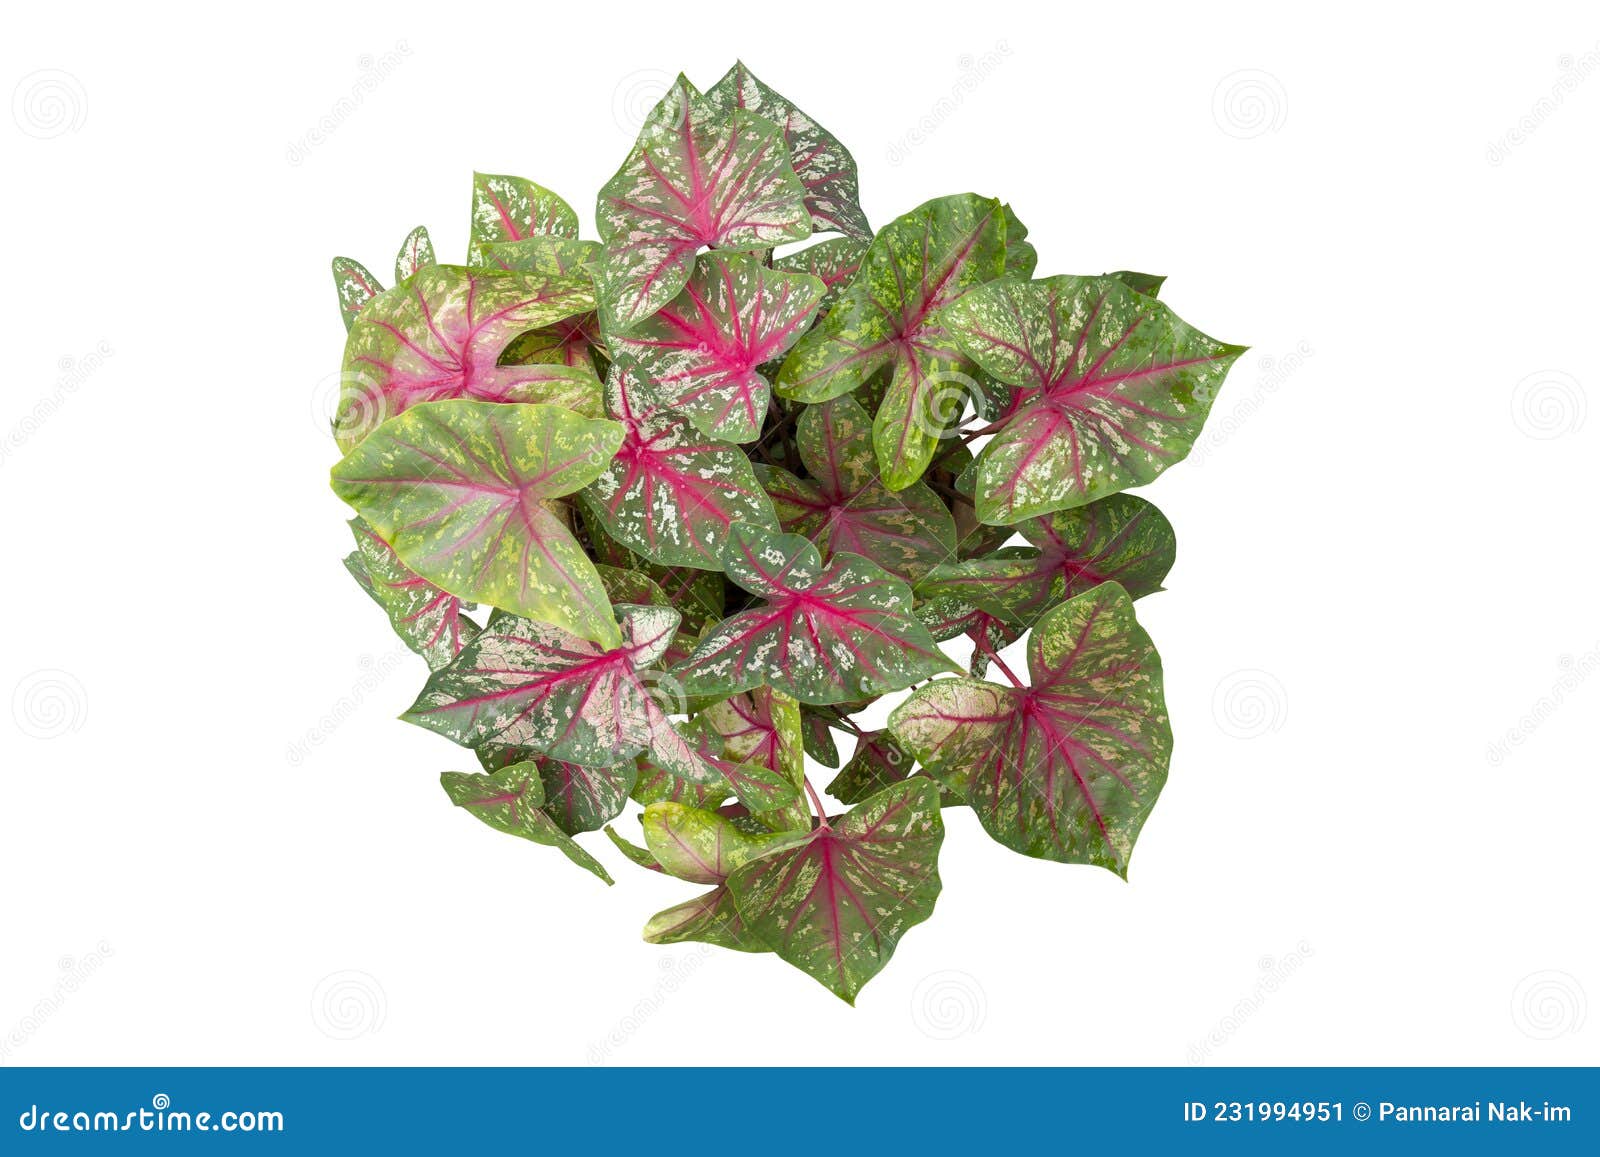 Top View of Caladium Bicolor is Queen of the Leafy Plants in Pot ...